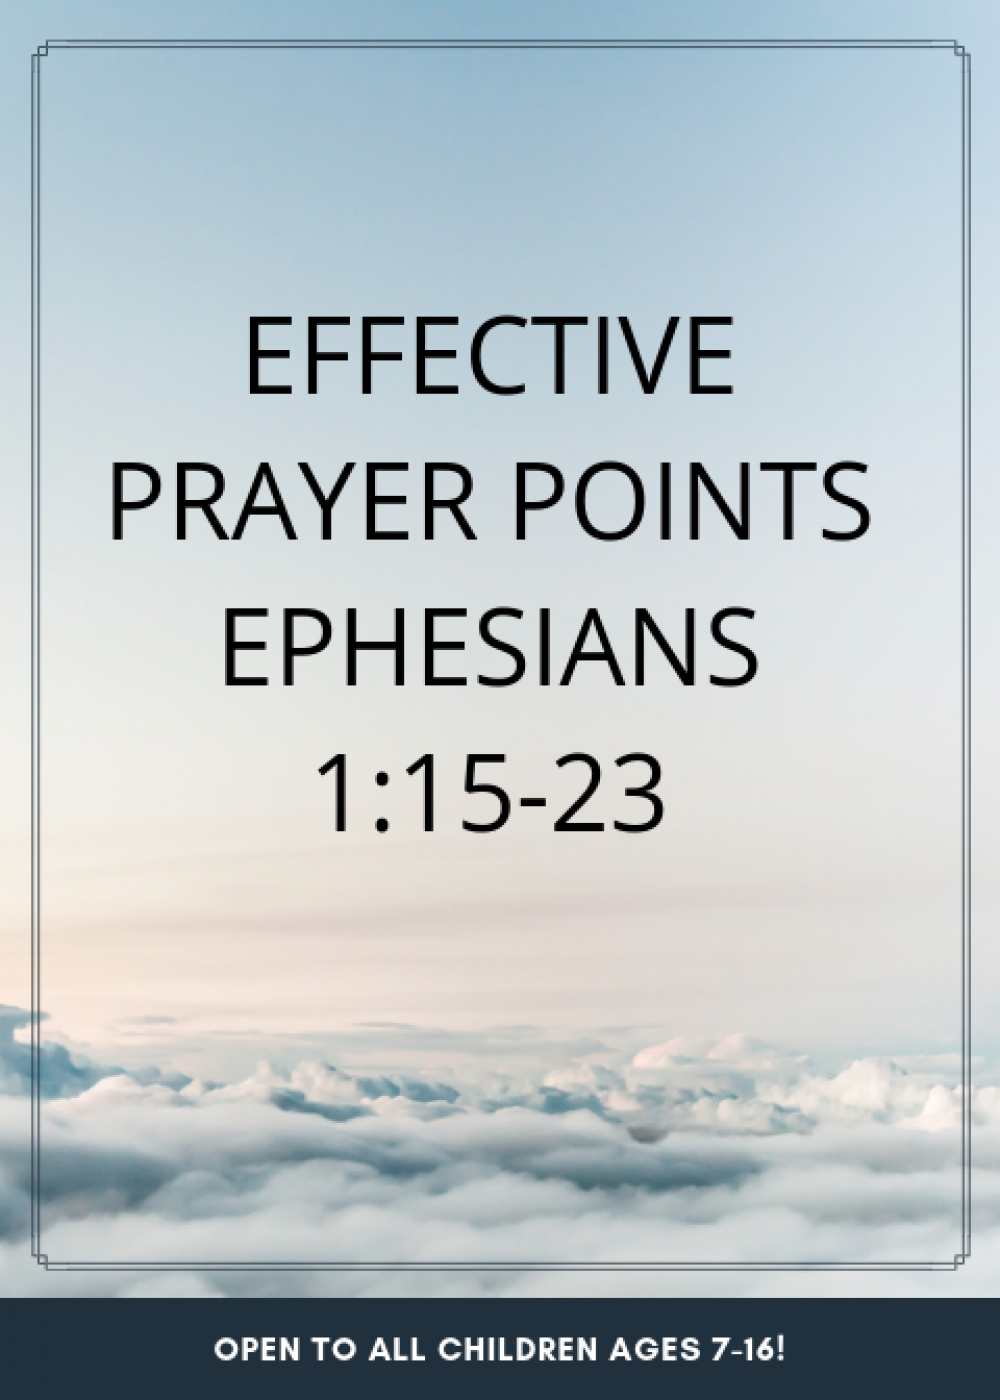 30 Effective Prayer Points PRAYER POINTS